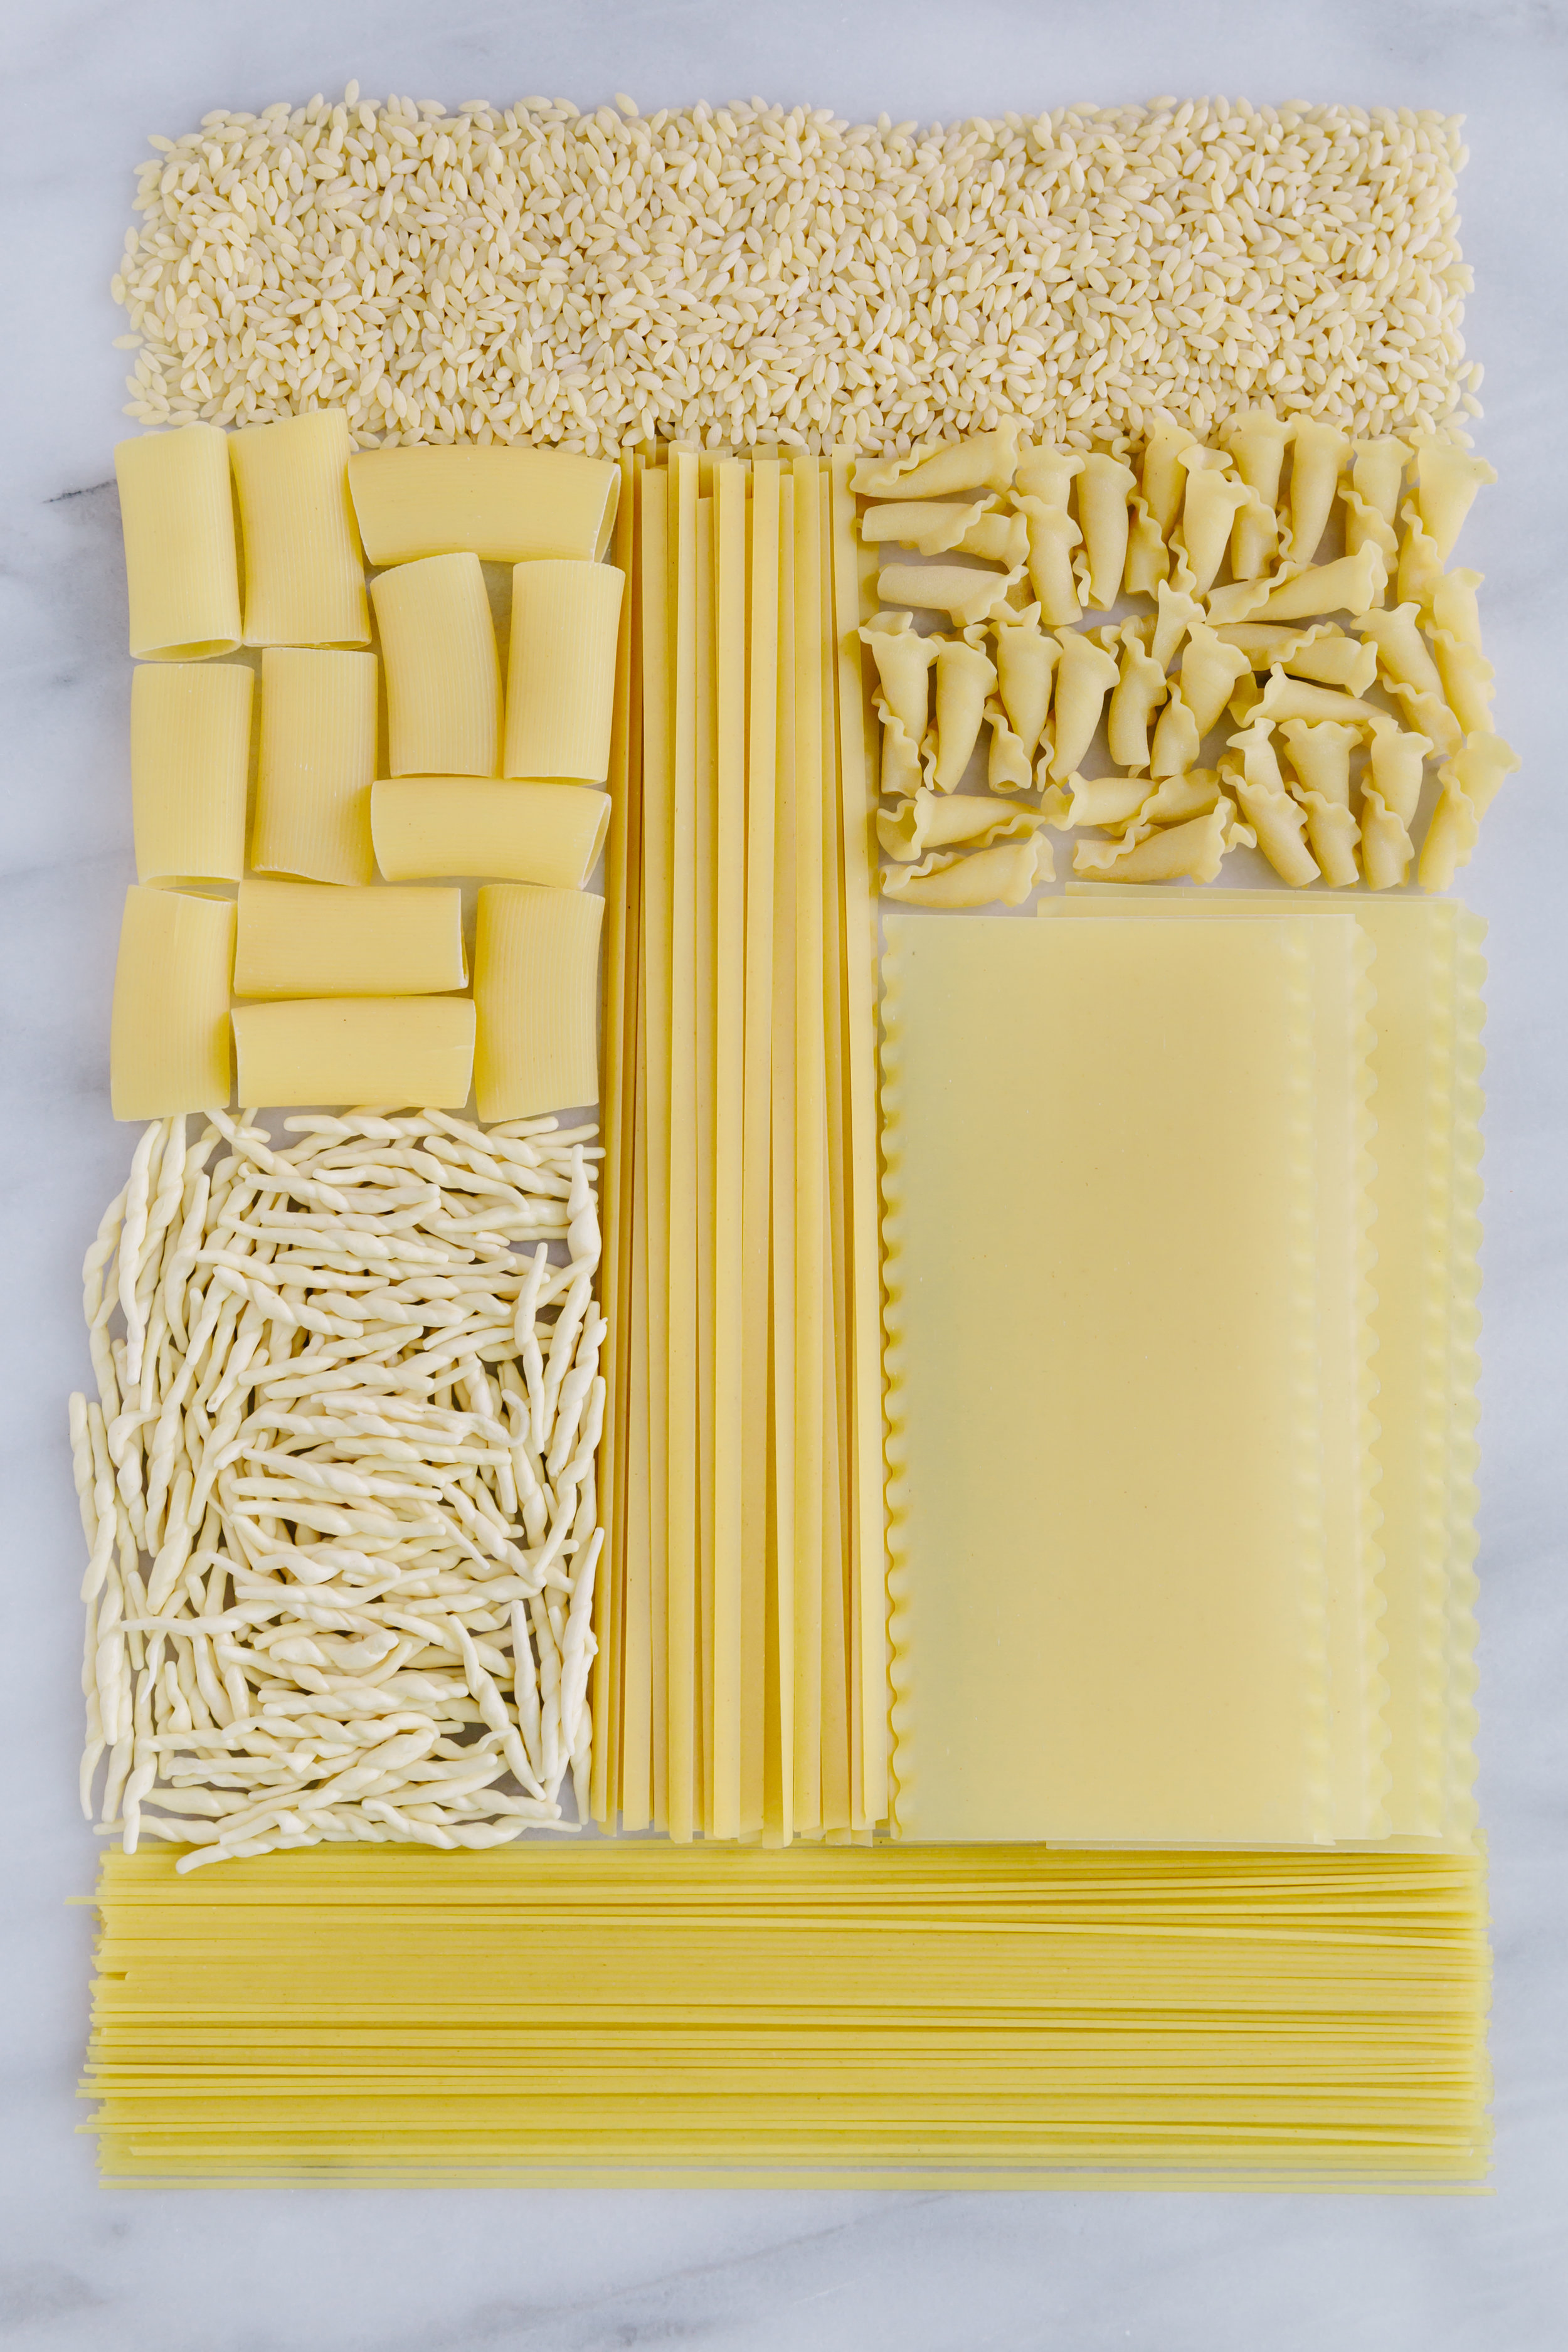 types of pasta-7954.jpg